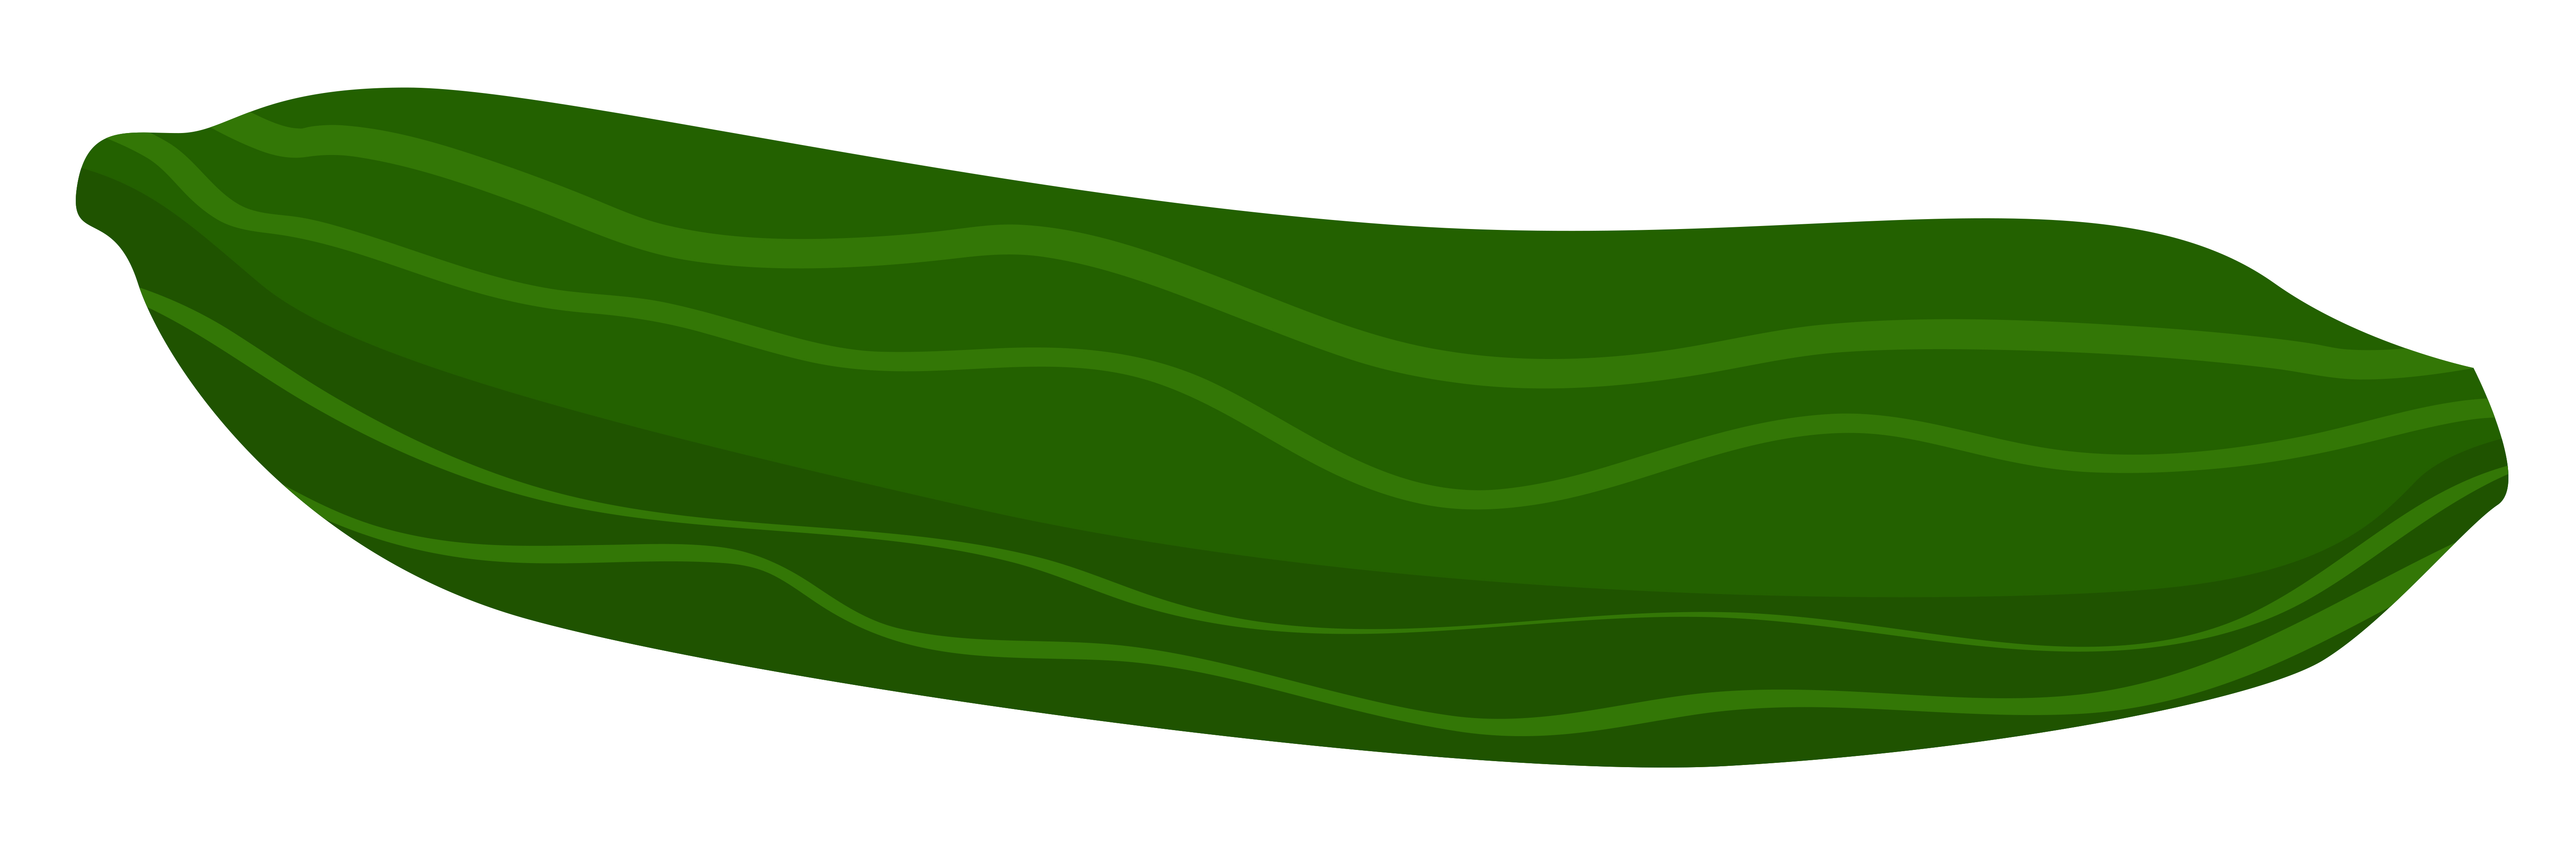 Cucumber clipart kiaavto image